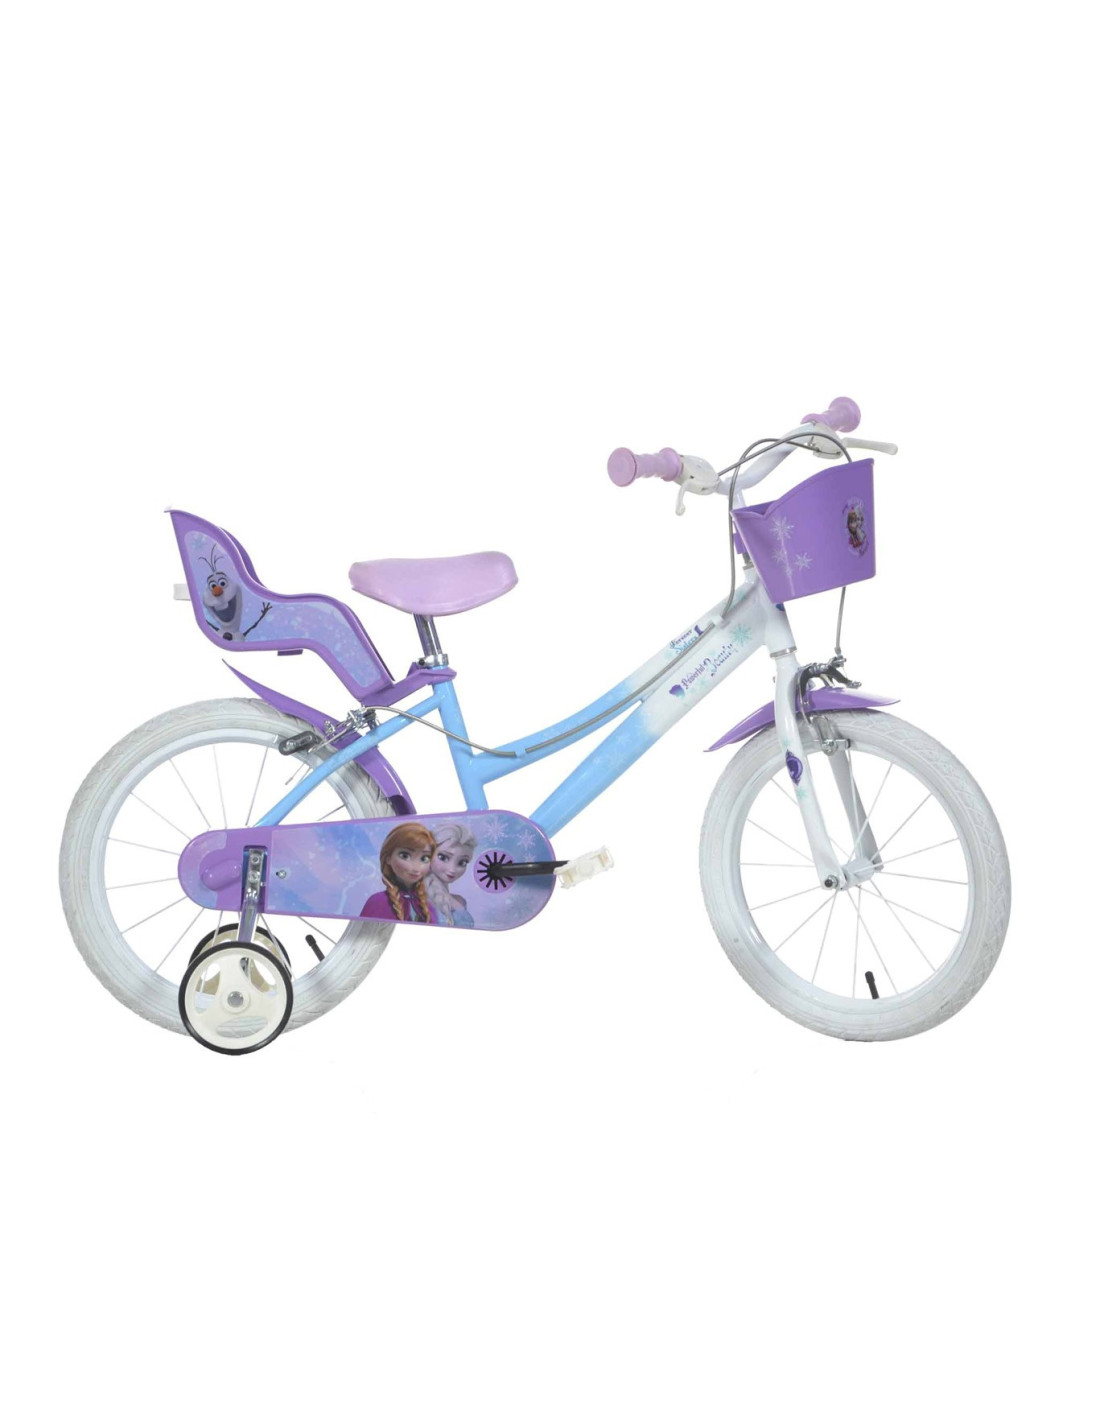 Bicicletta bambina 146 RL-FZ2 misura 14''FROZEN bici età 3-6 anni